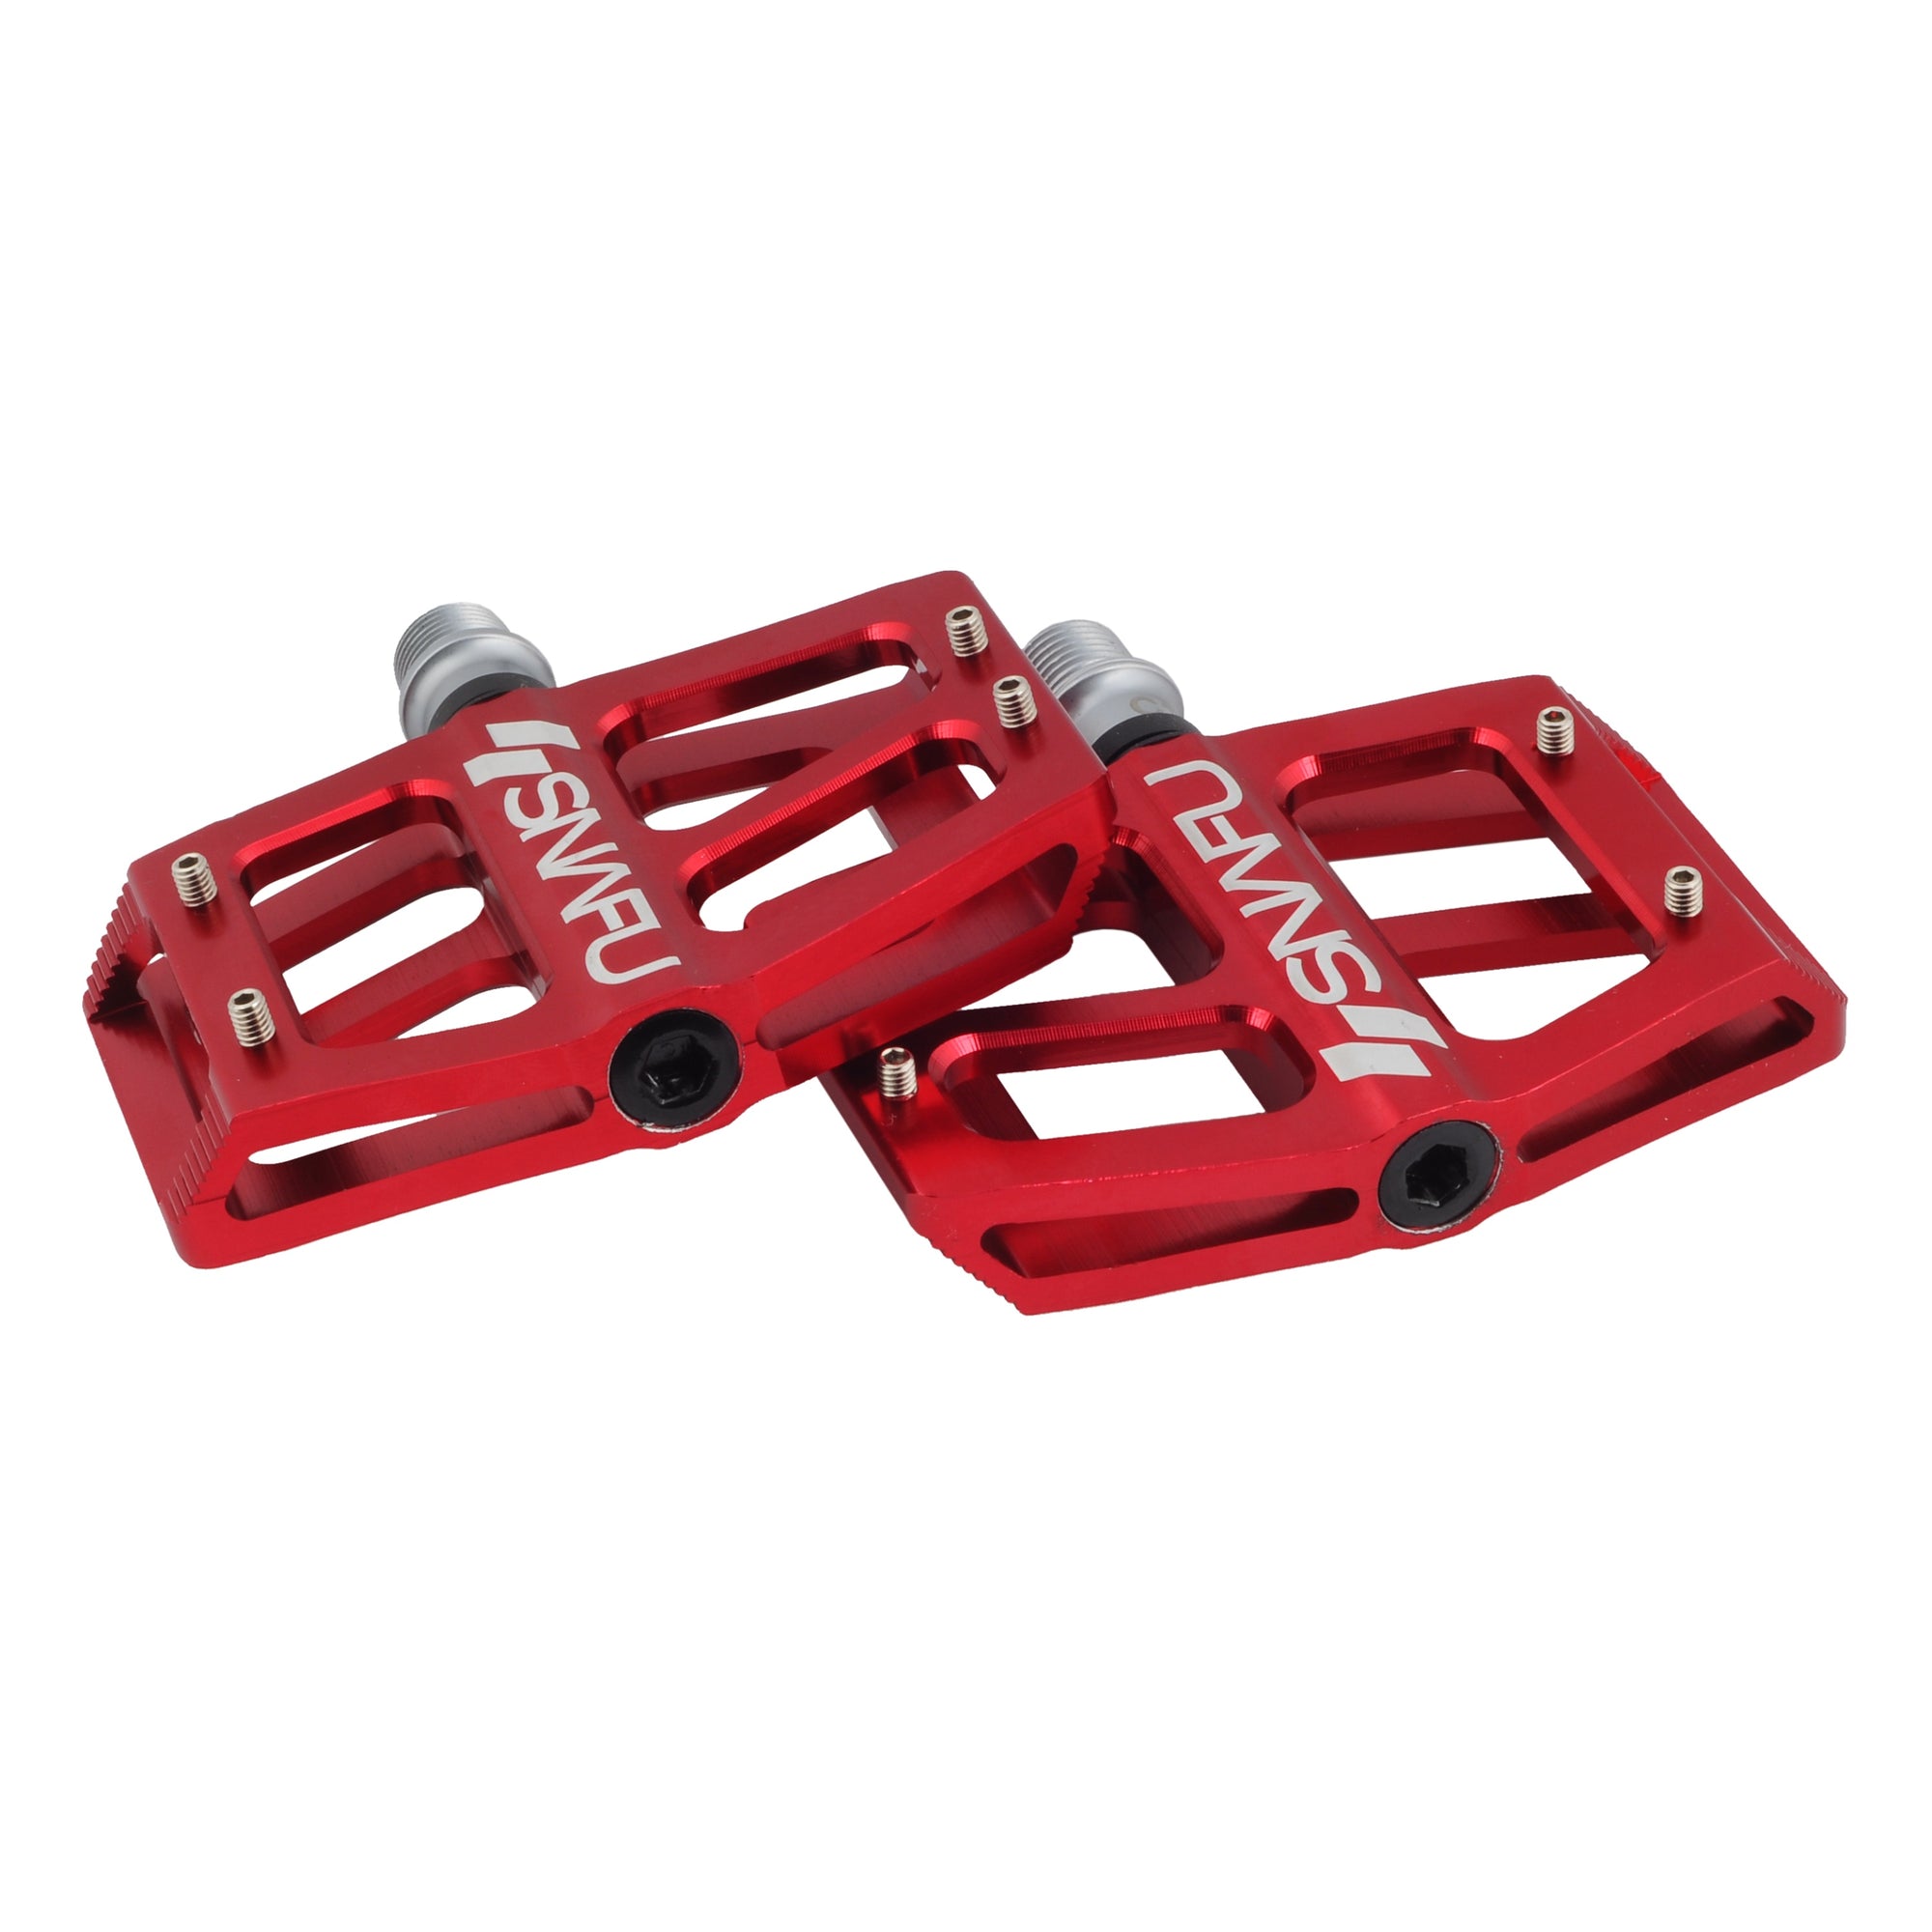 Snafu BMX Cactus Jr Aluminum Platform Pedals - Sealed - 9/16 - Red